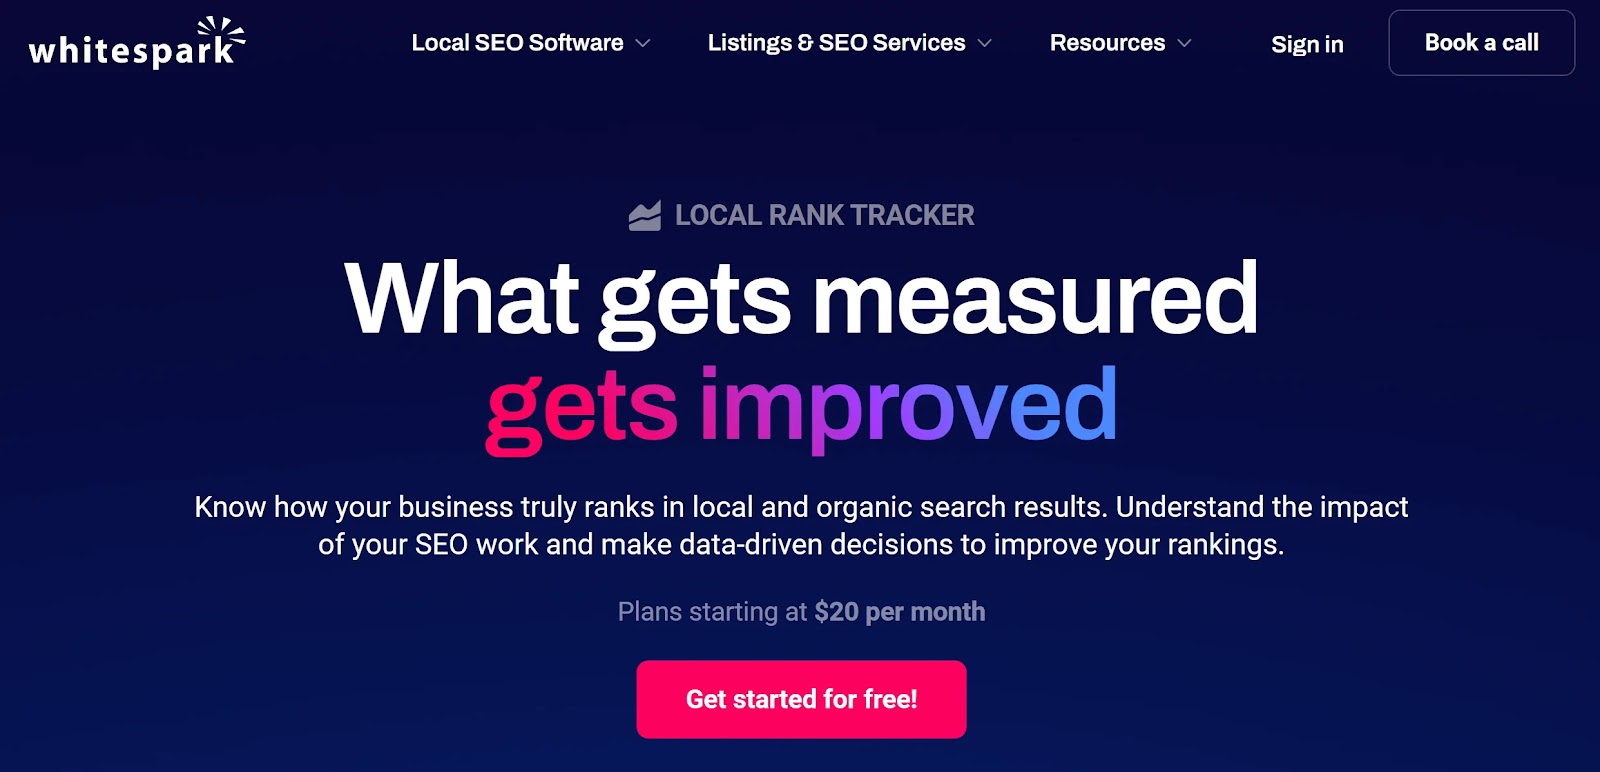 Whitespark Local Rank Tracker tool homepage.